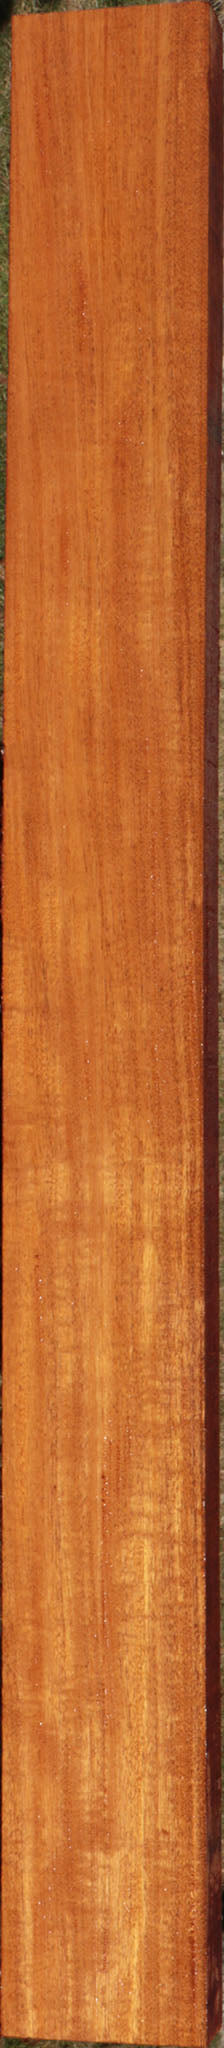 Extra Fancy Honduras Mahogany Instrument Lumber